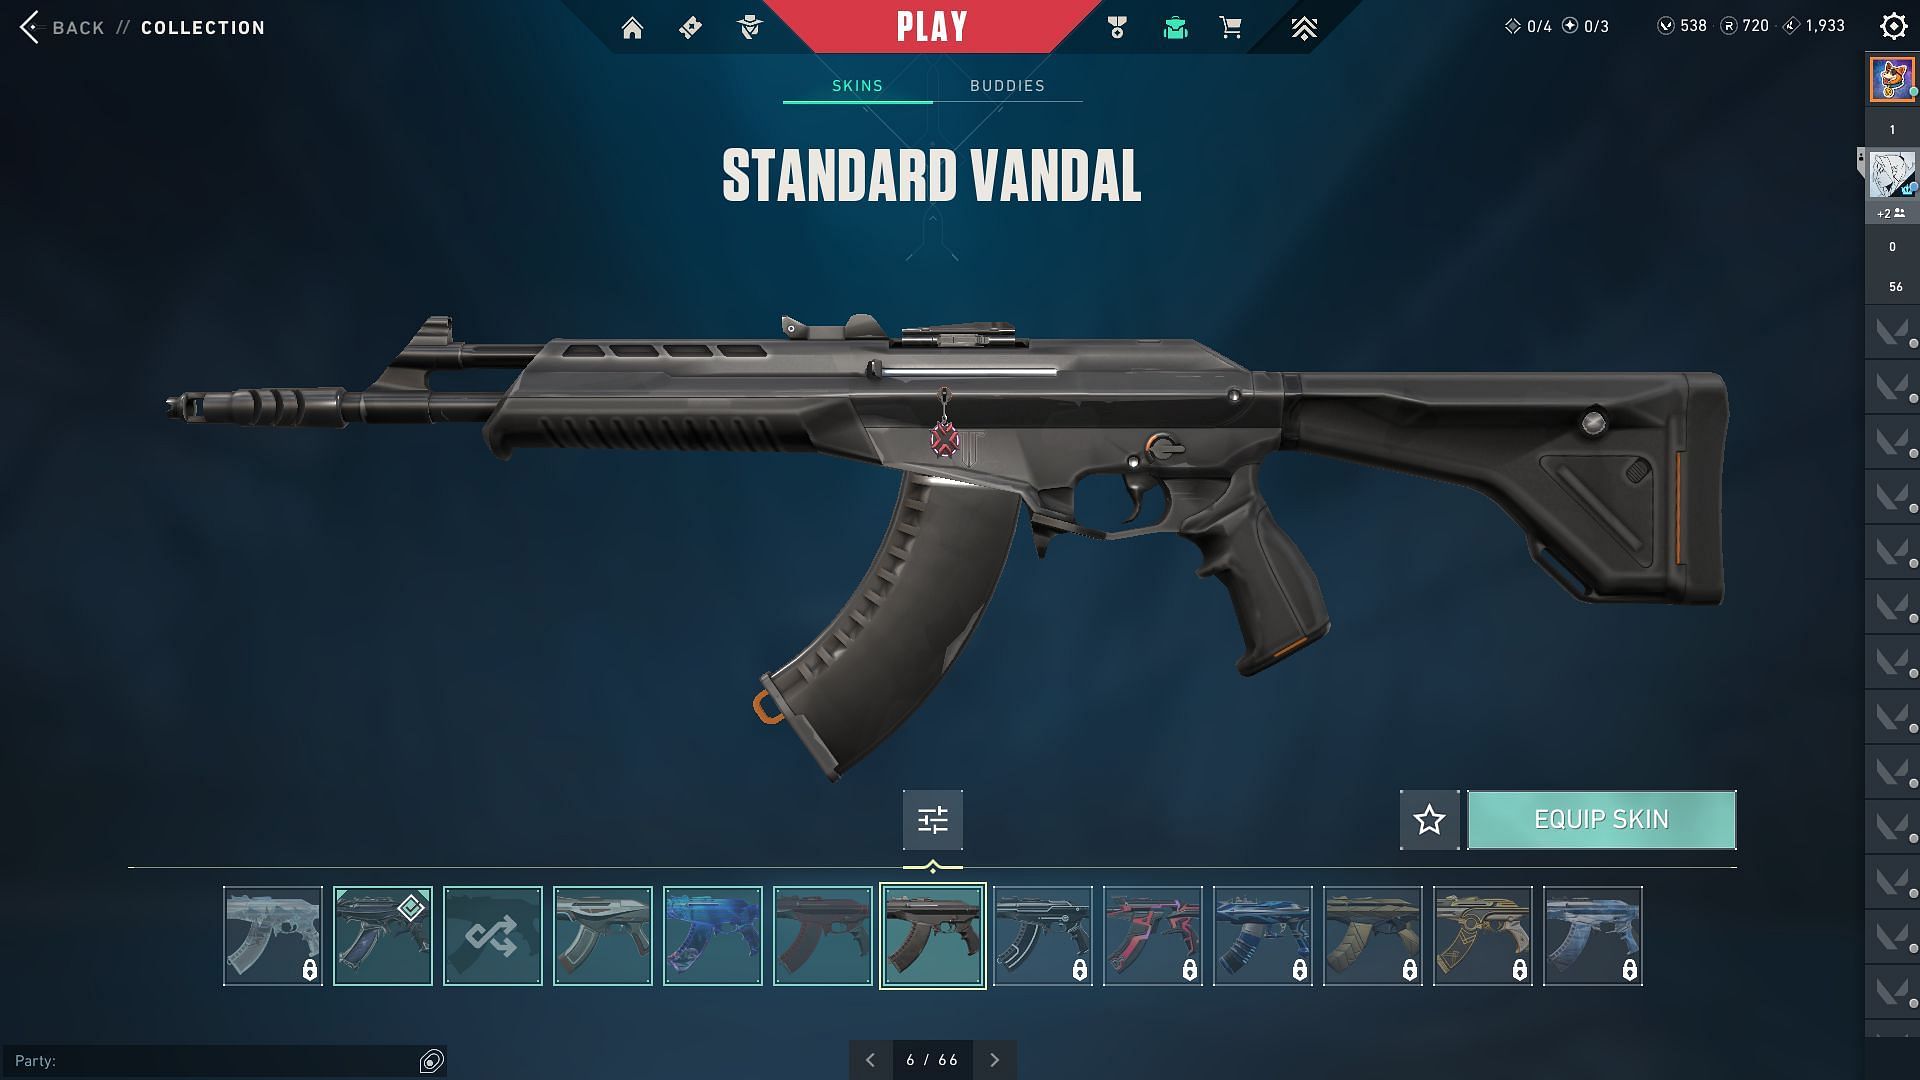 The weapon, Vandal (Image via Riot Games)